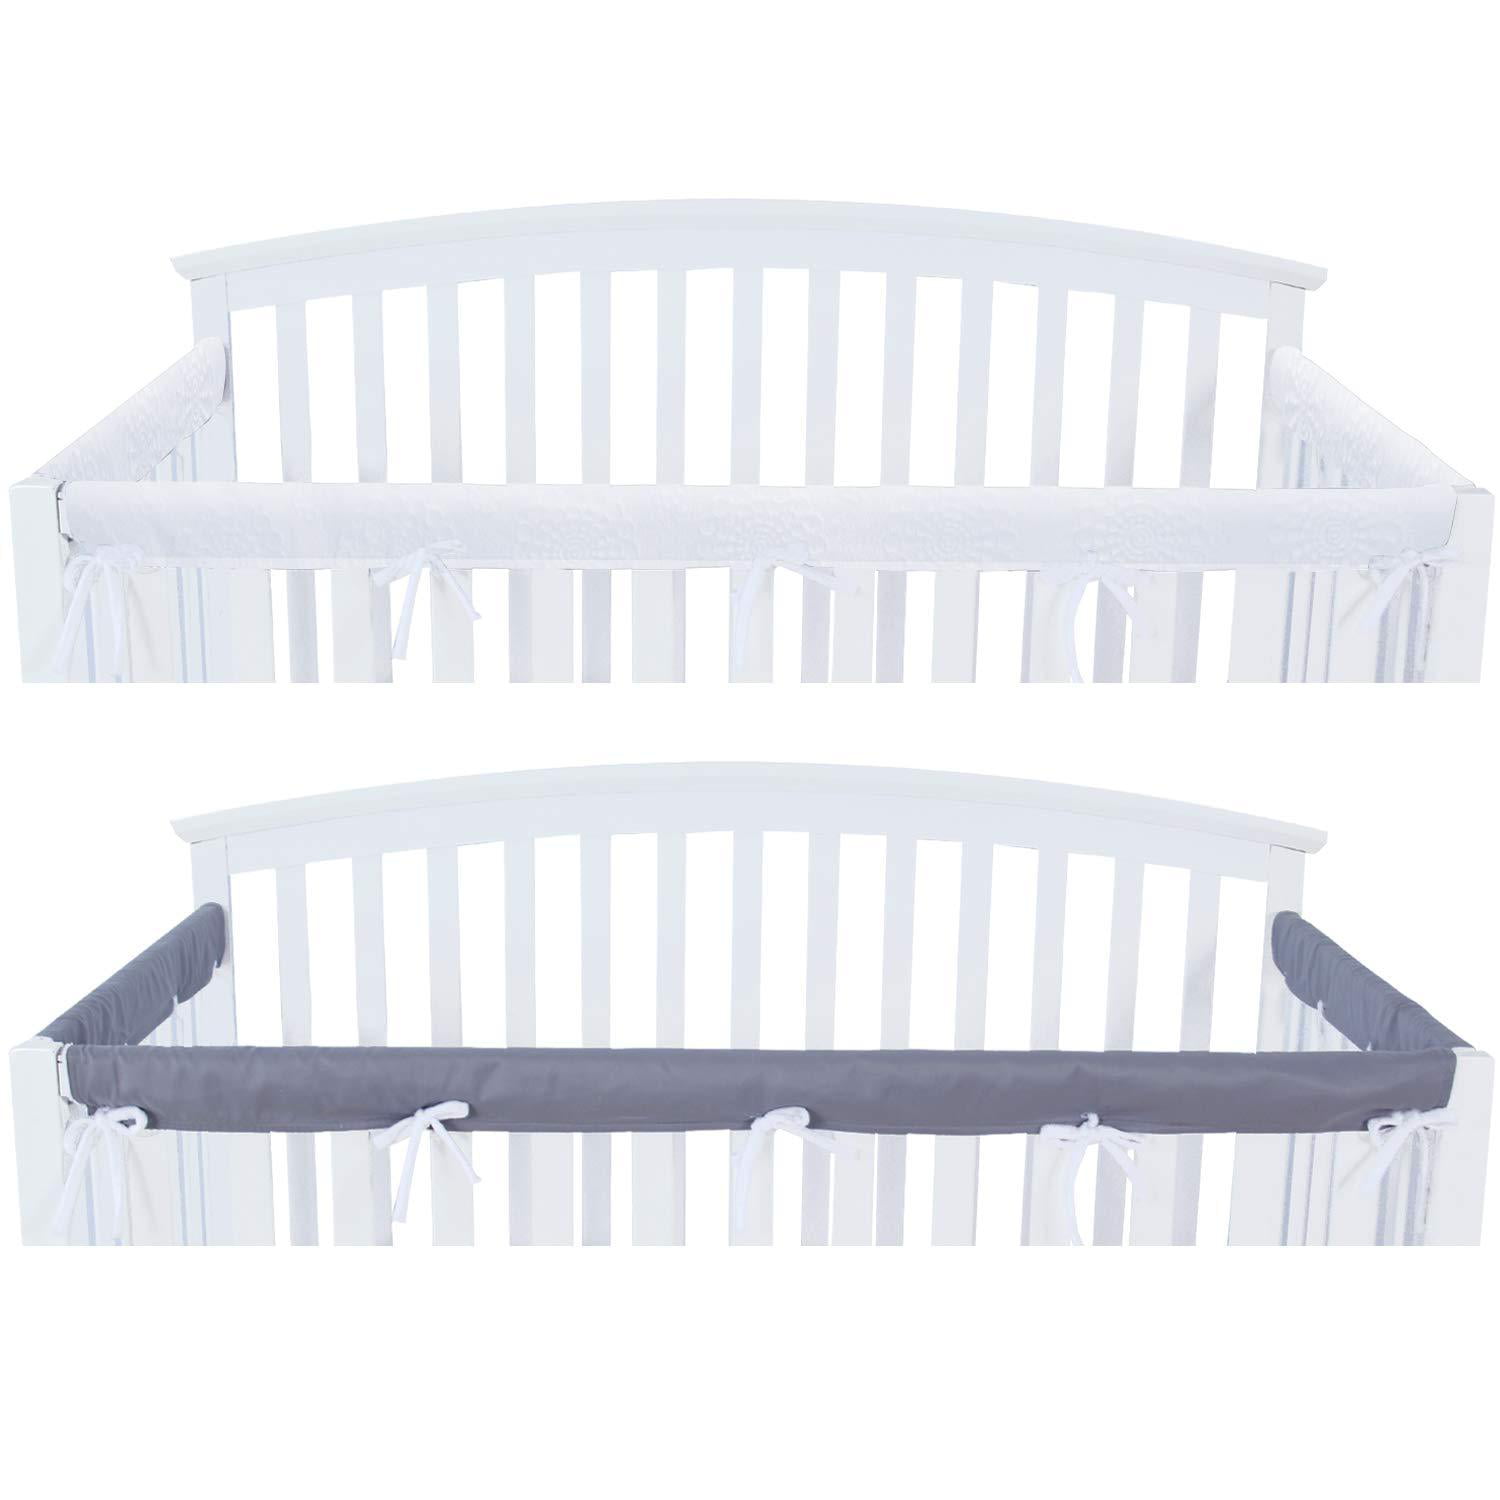 3 Piece Crib Rail Cover Protector Safe Teething Guard Wrap for Standard Crib Rails, Grey